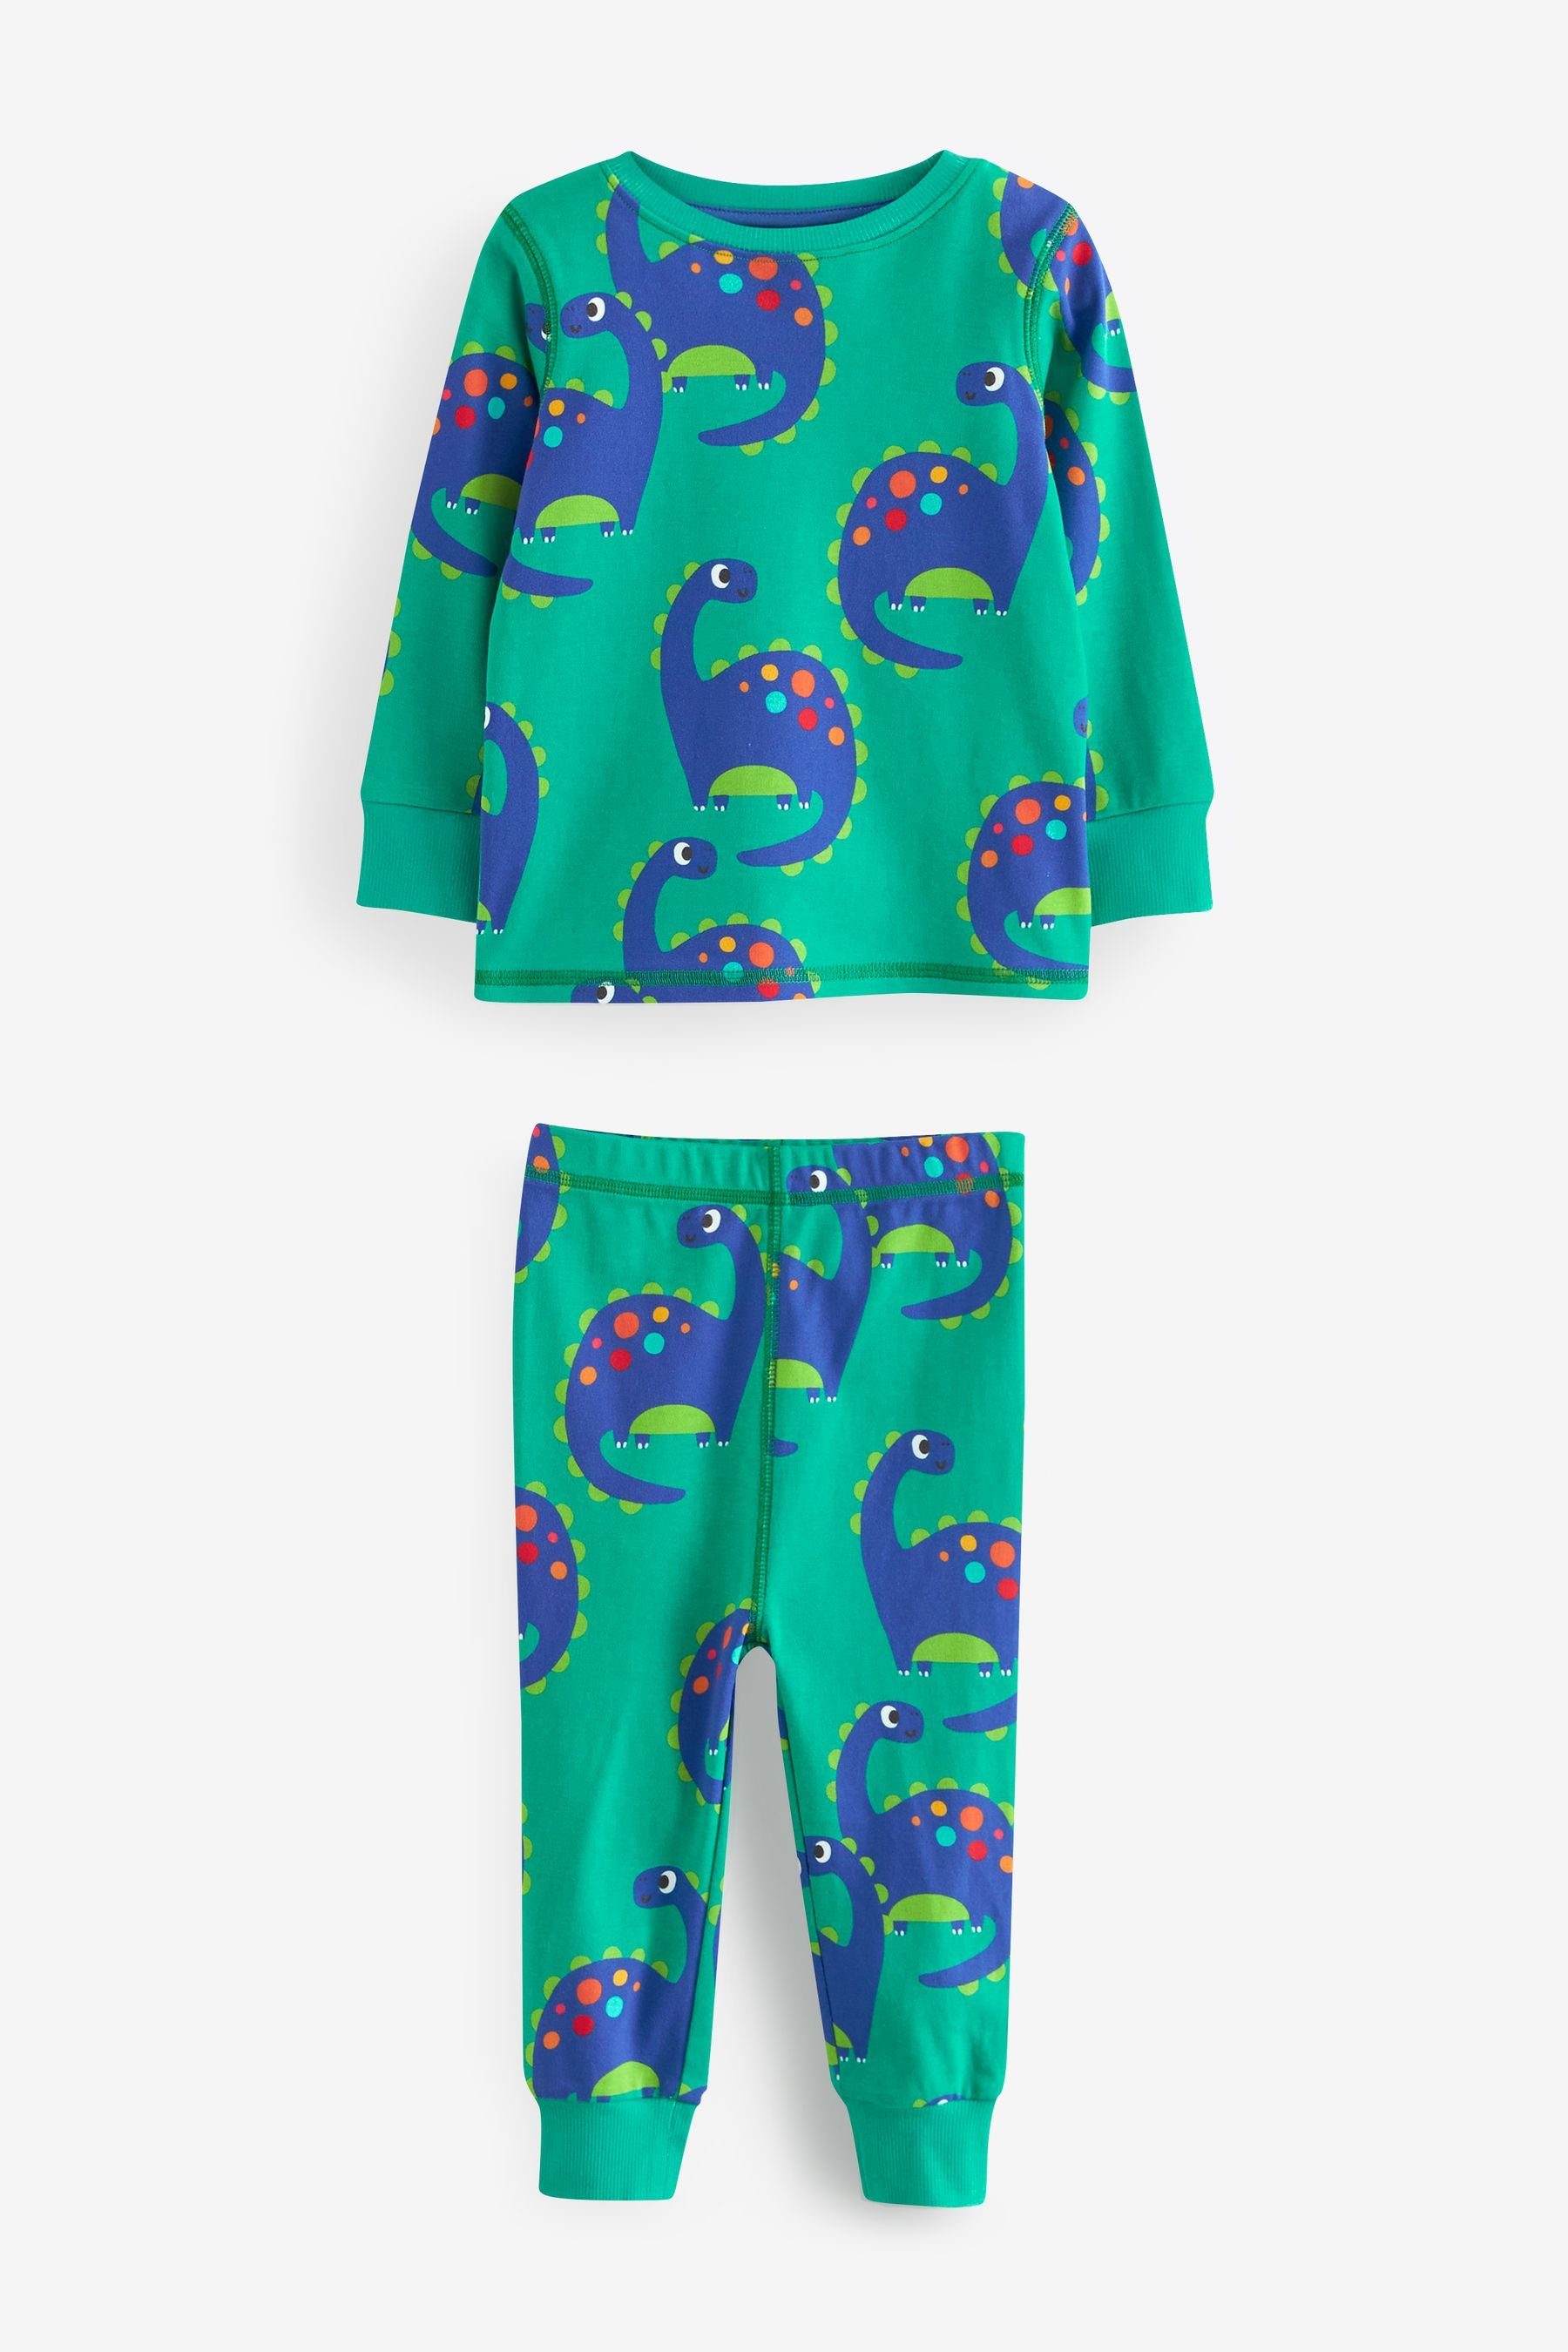 Next Pyjama 3er-Pack Dinosaur tlg) Red/Blue/Green Snuggle Schlafanzüge (6